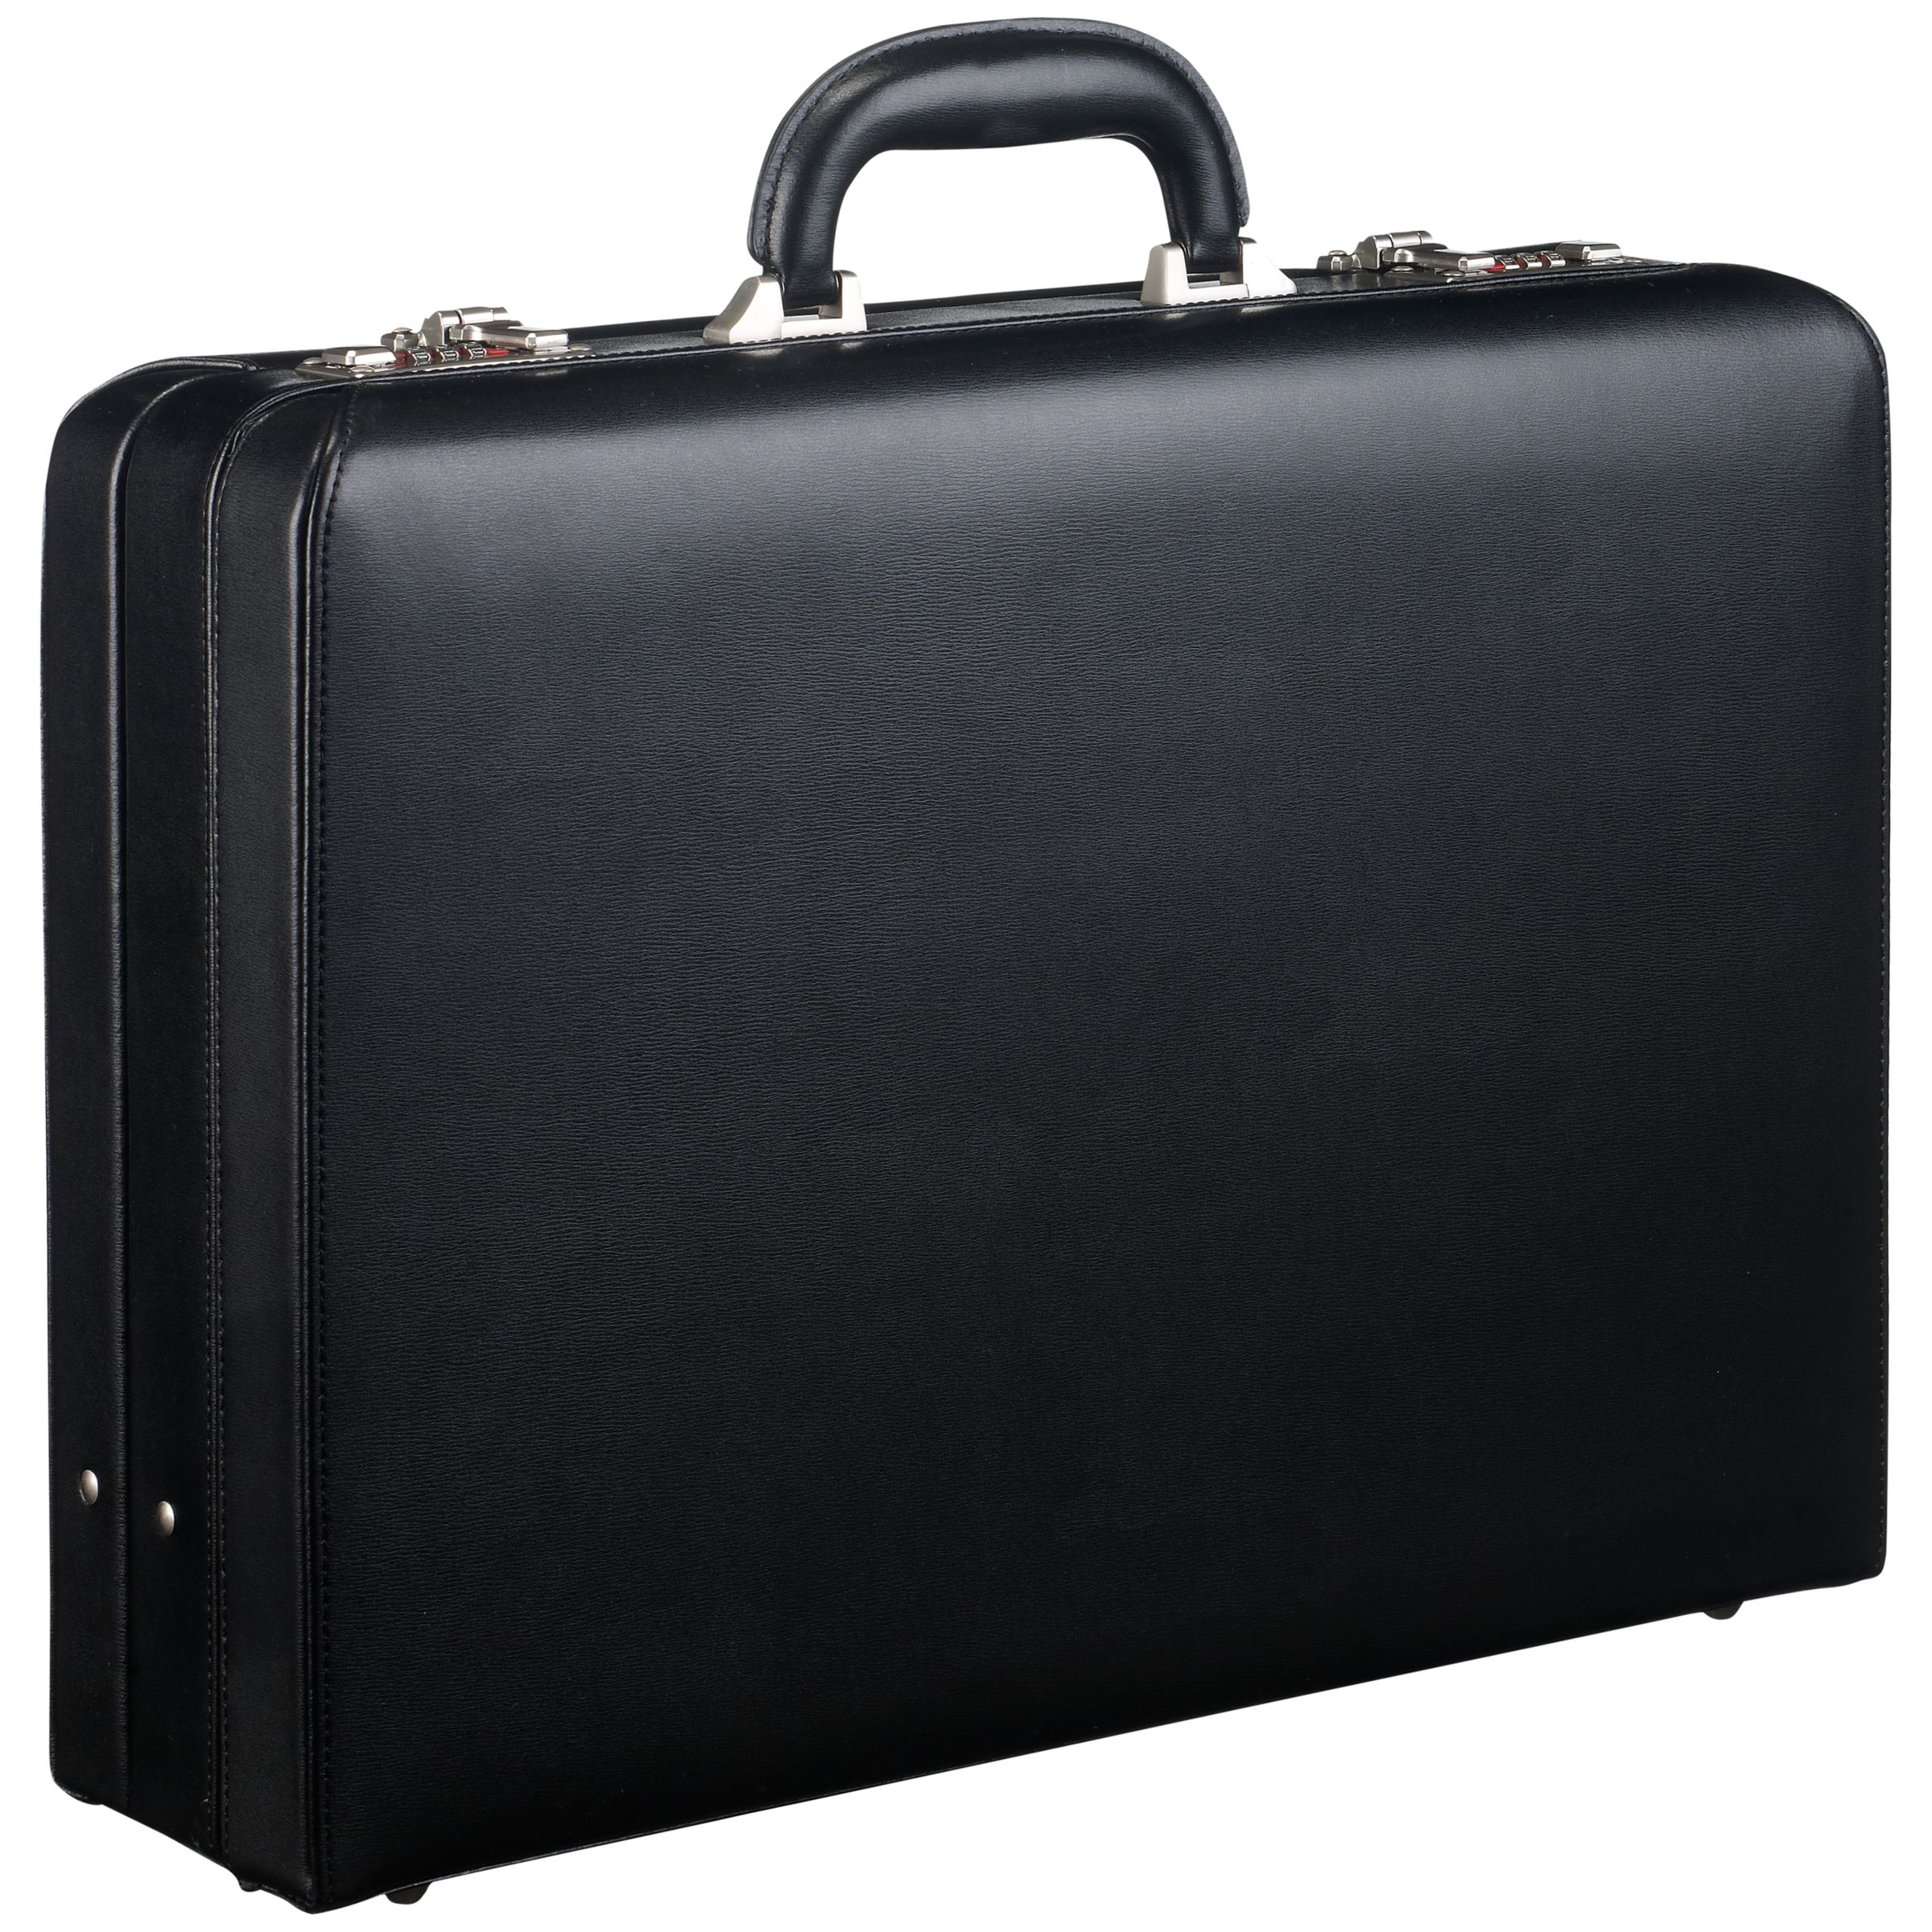 John Lewis Chicago Attache Leather Briefcase, Black